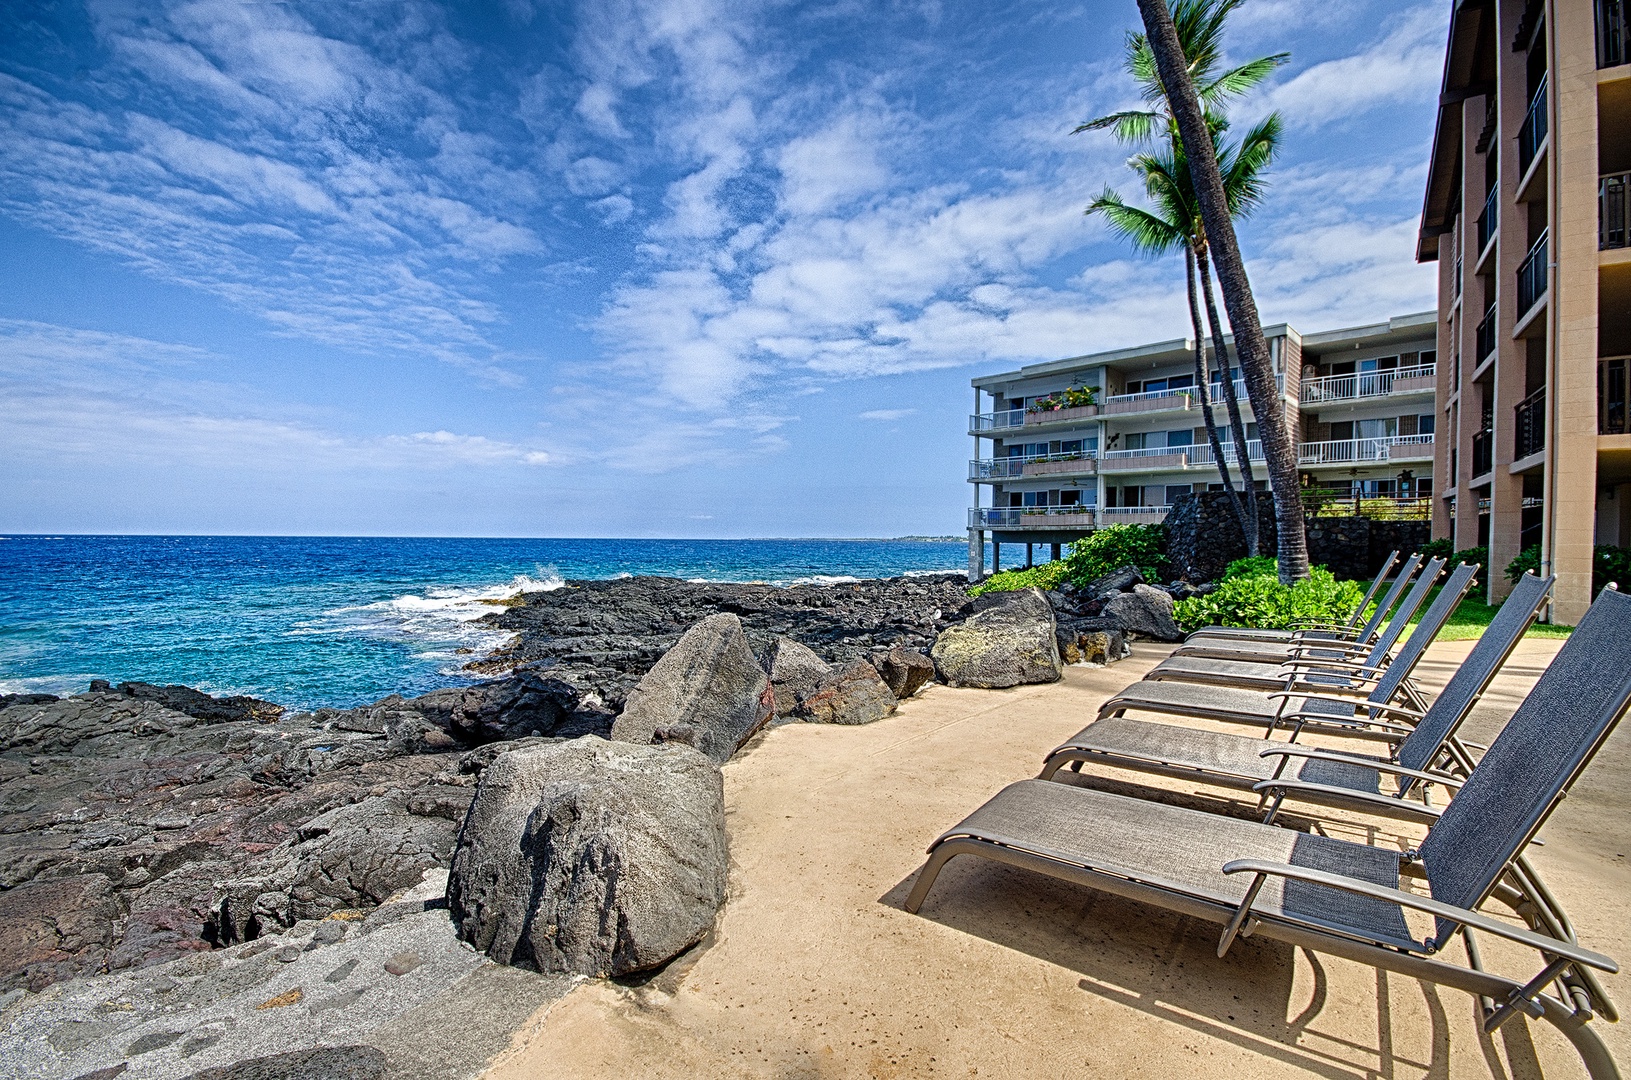 Kailua Kona Vacation Rentals, Kona Makai 6201 - Lounge in the sun in the man made beach area